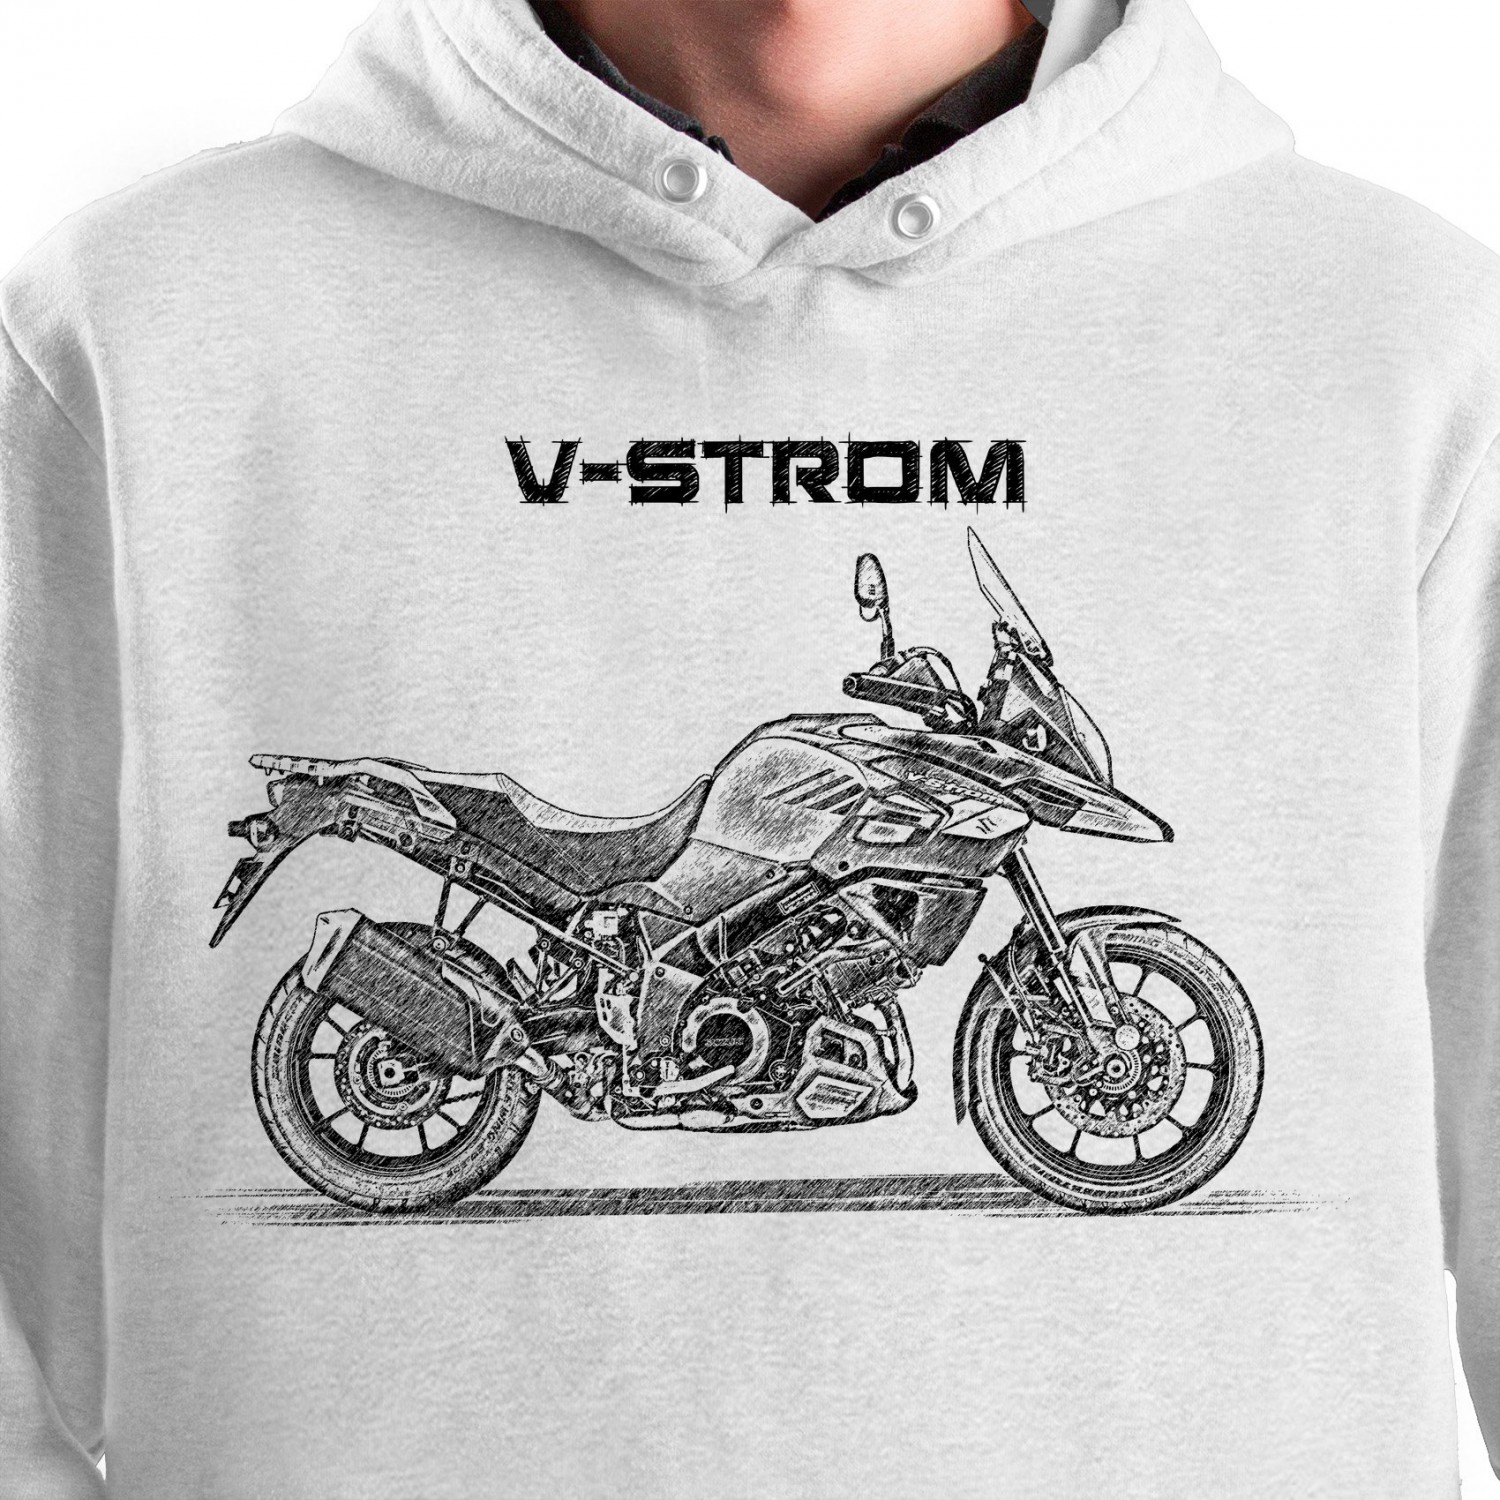 White T-shirt with Suzuki V-Strom 1000. Gift for motorcyclist.